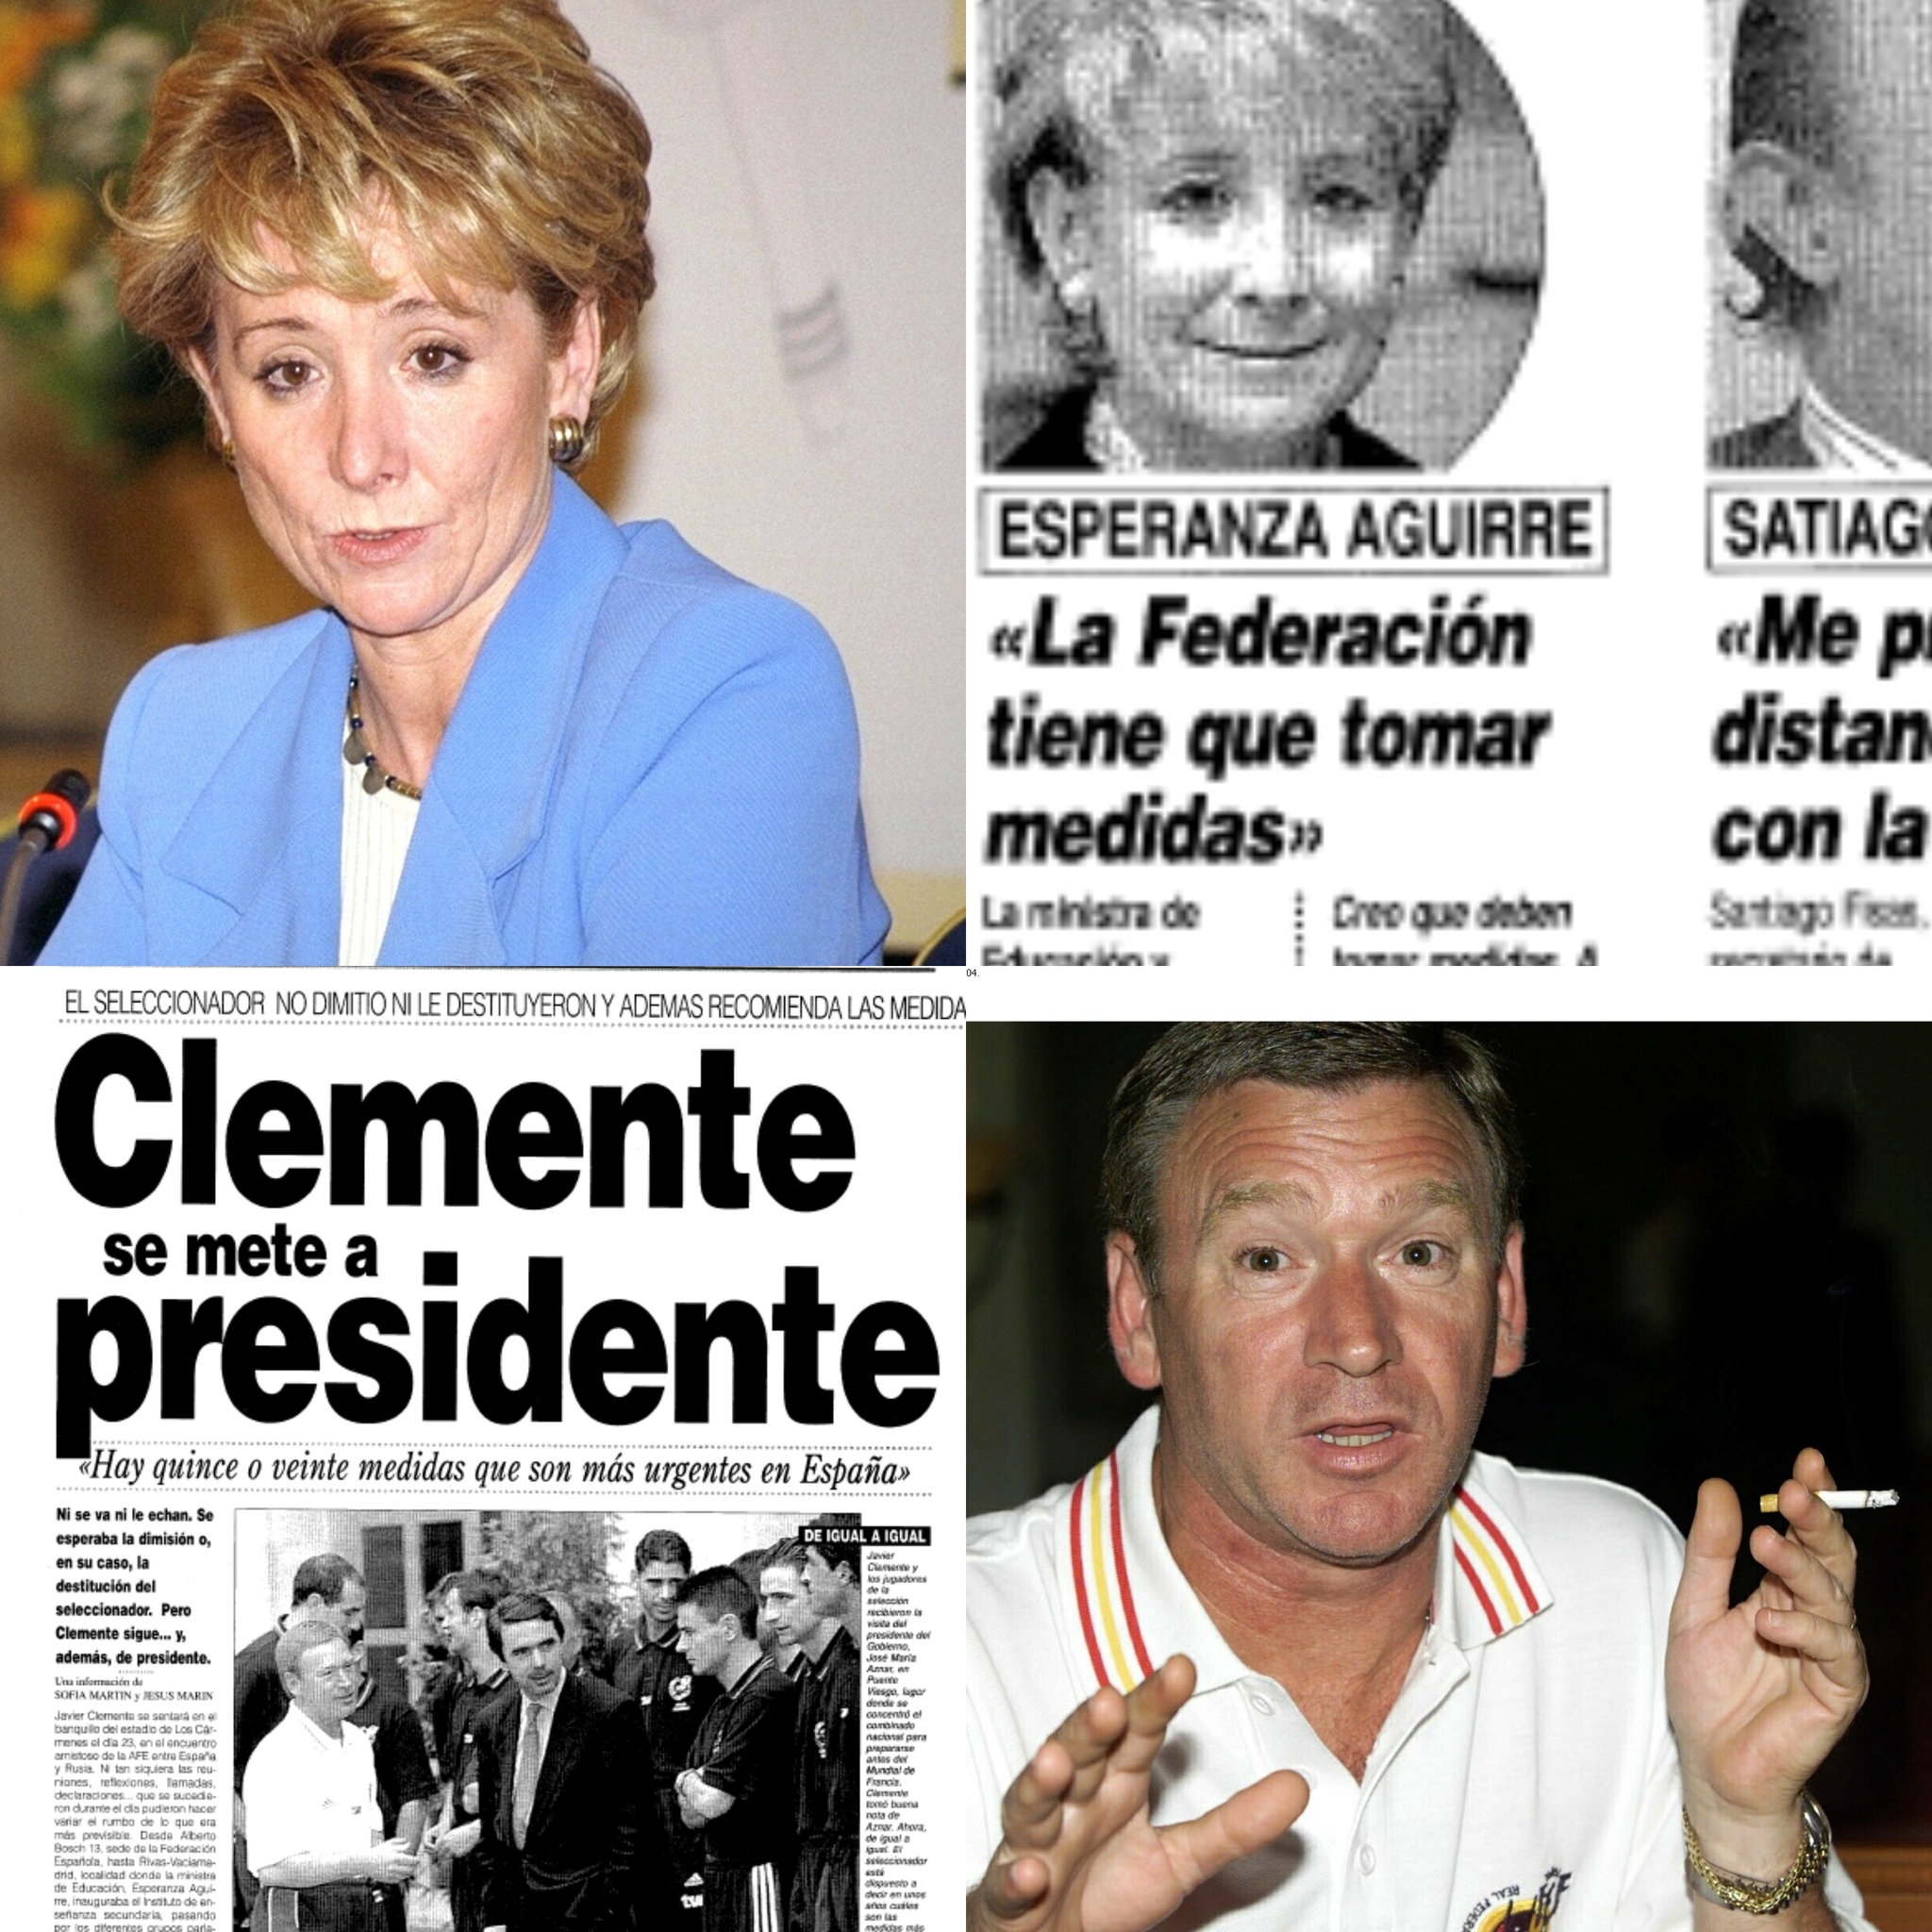 Esperanza Aguirre pidi a Villar "tomar medidas" contra Clemente